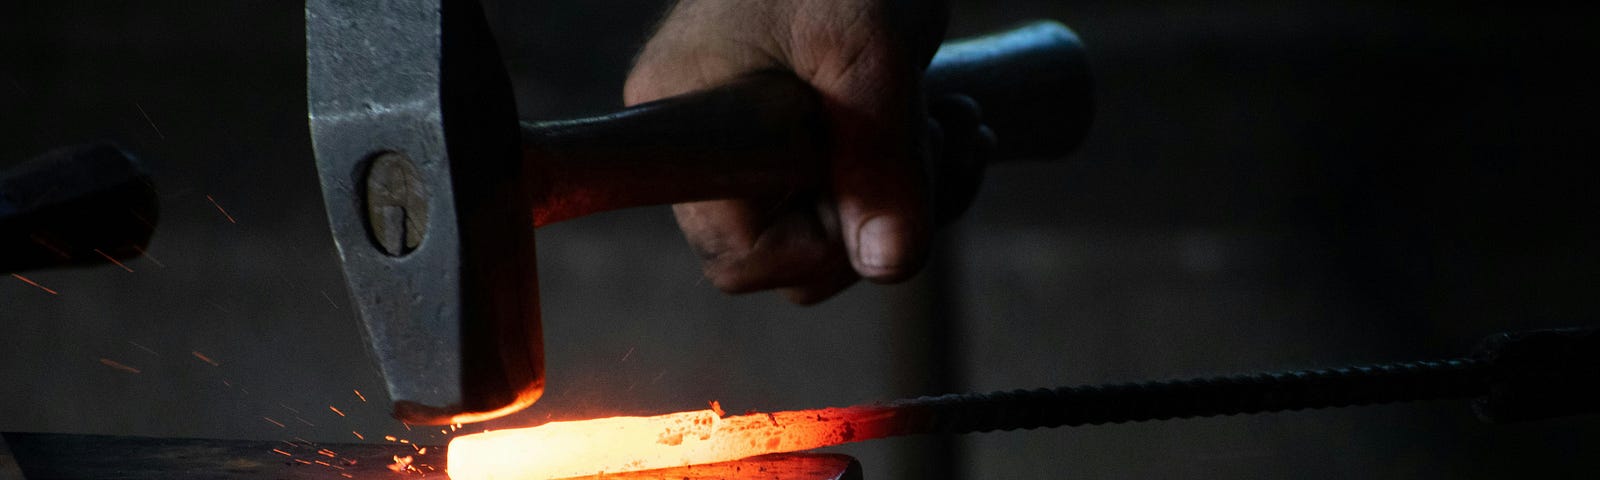 A blacksmith’s hammer